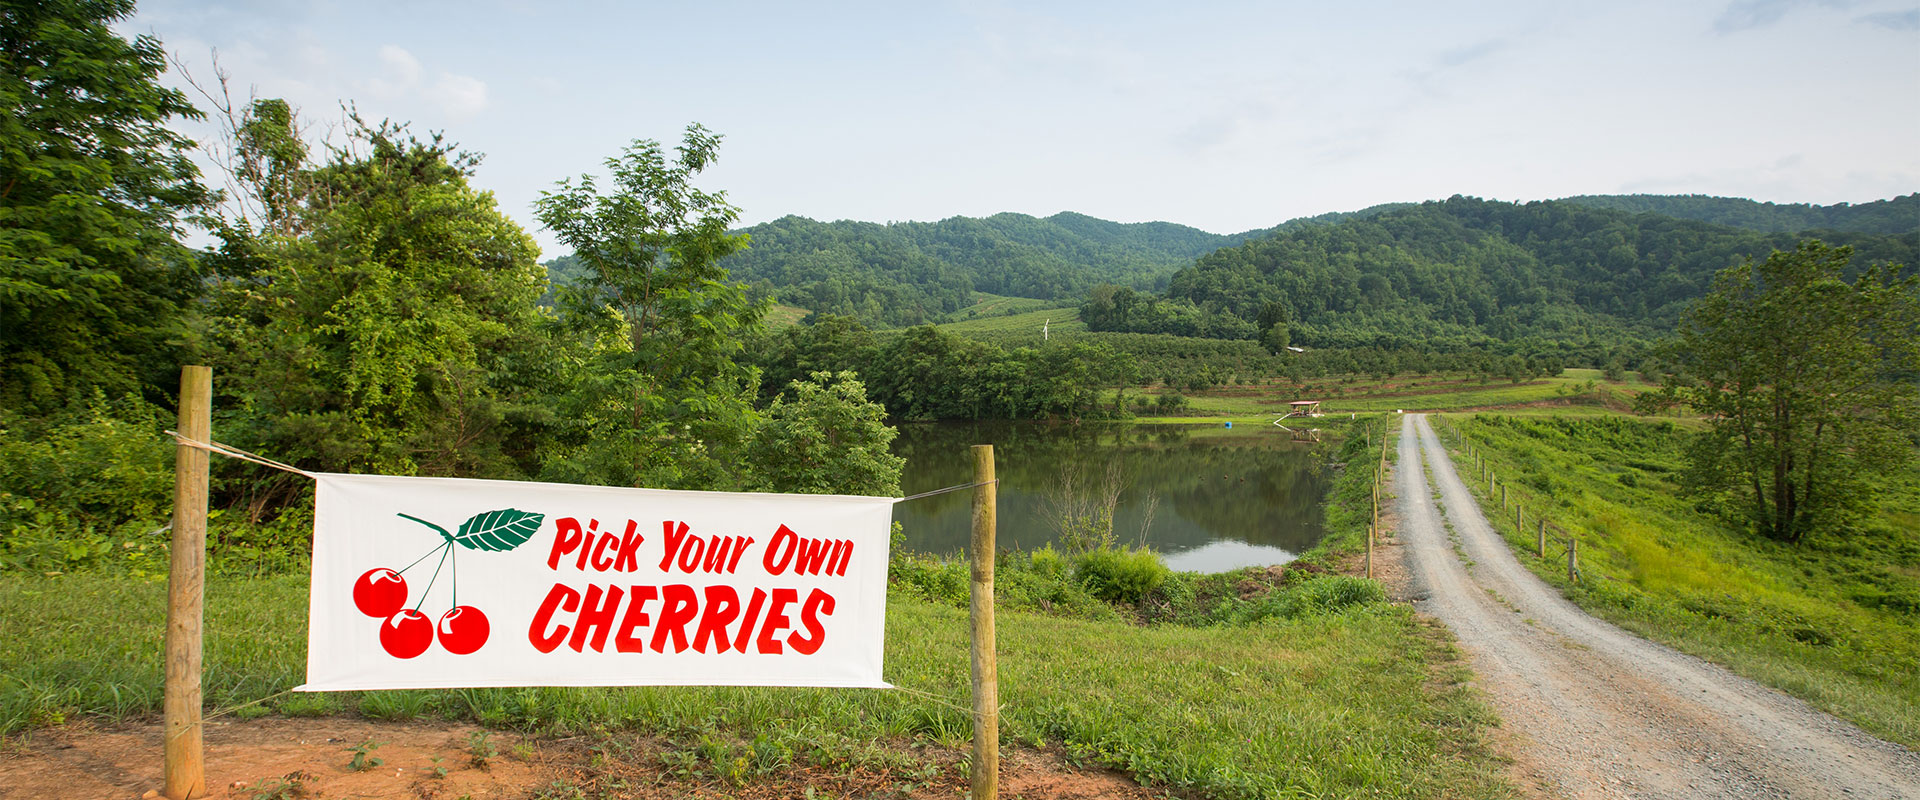 Pick your own cherries in Virginia